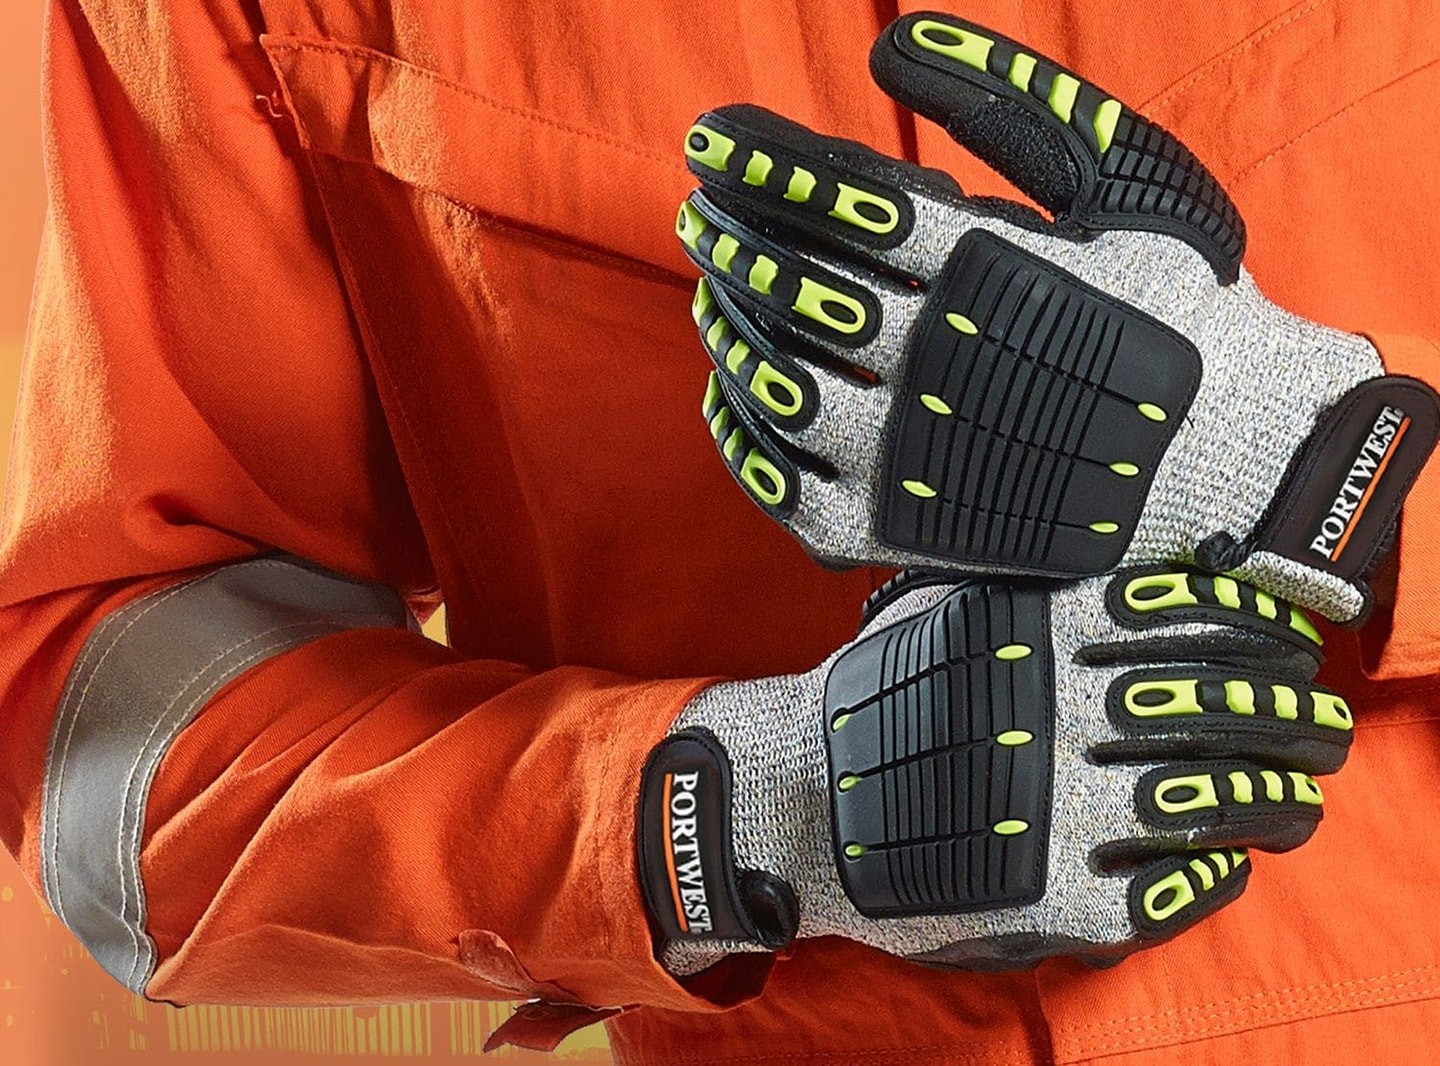 Portwest Anti Impact Cut Resistant Glove